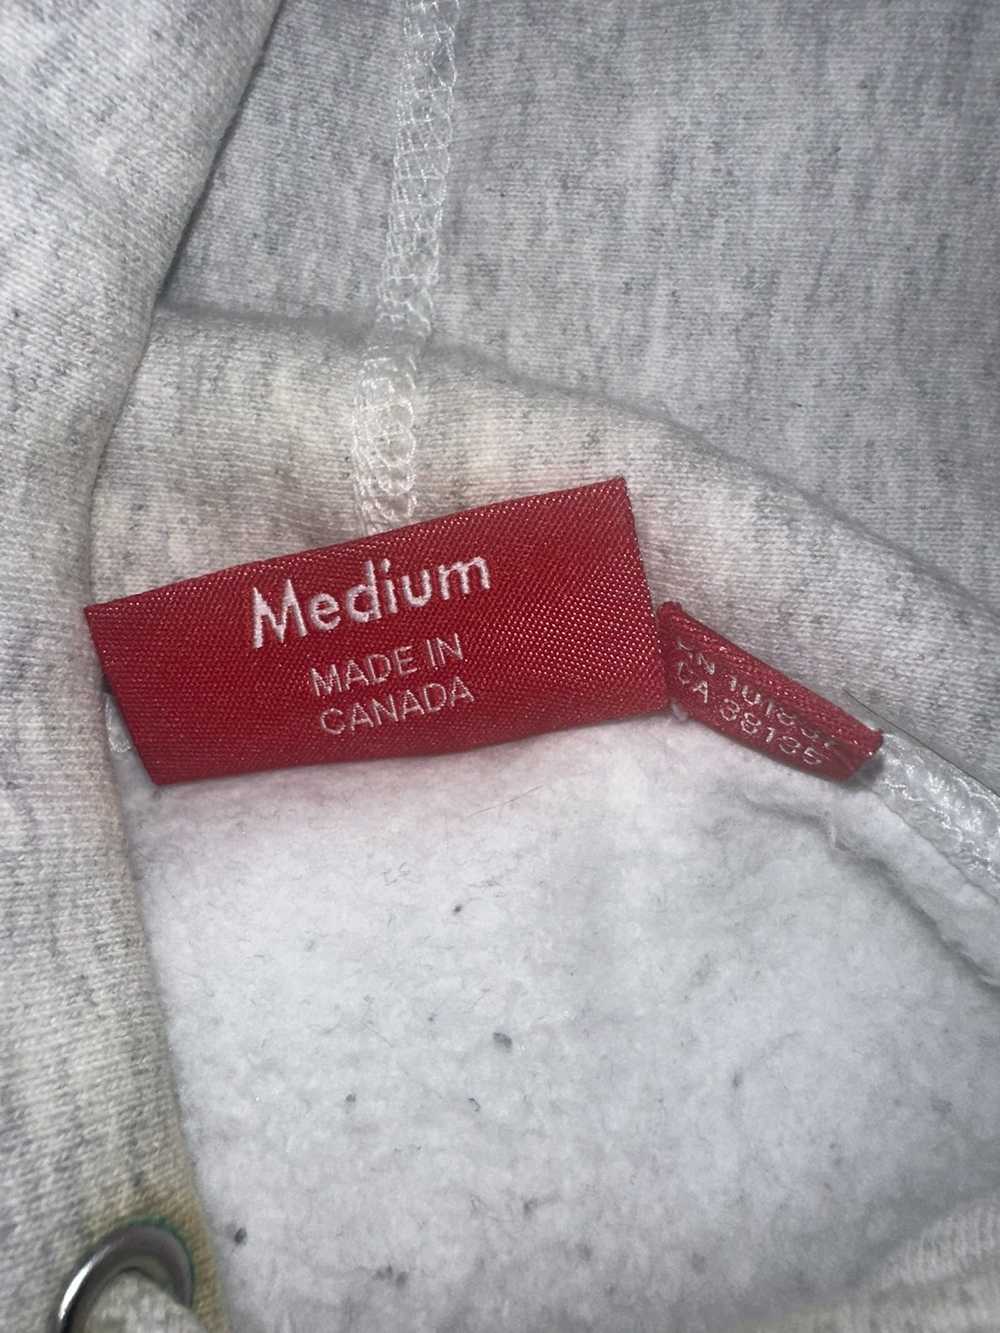 Supreme Supreme NY Hooded Sweatshirt Size Medium - image 5